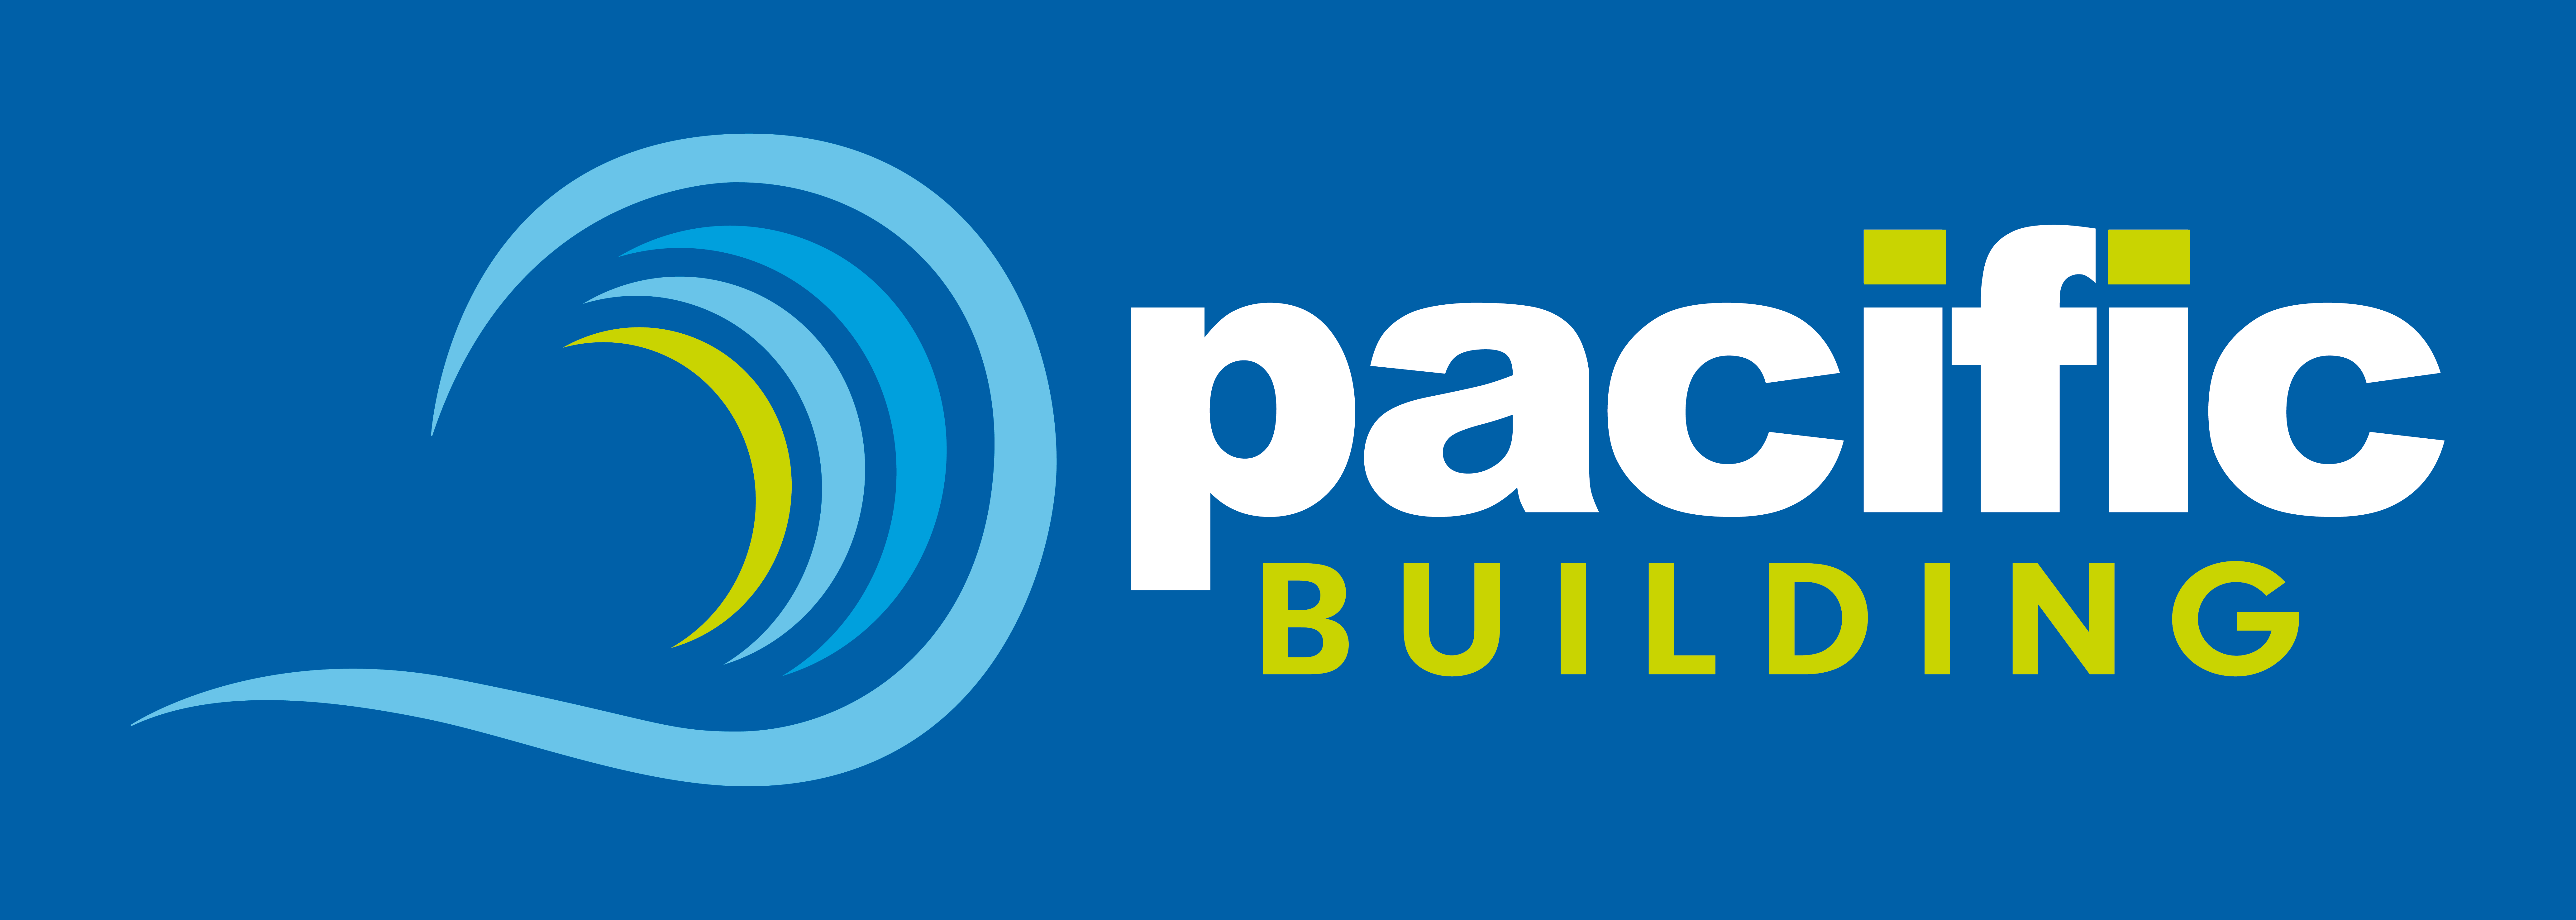 Pacific Building unveils rebrand